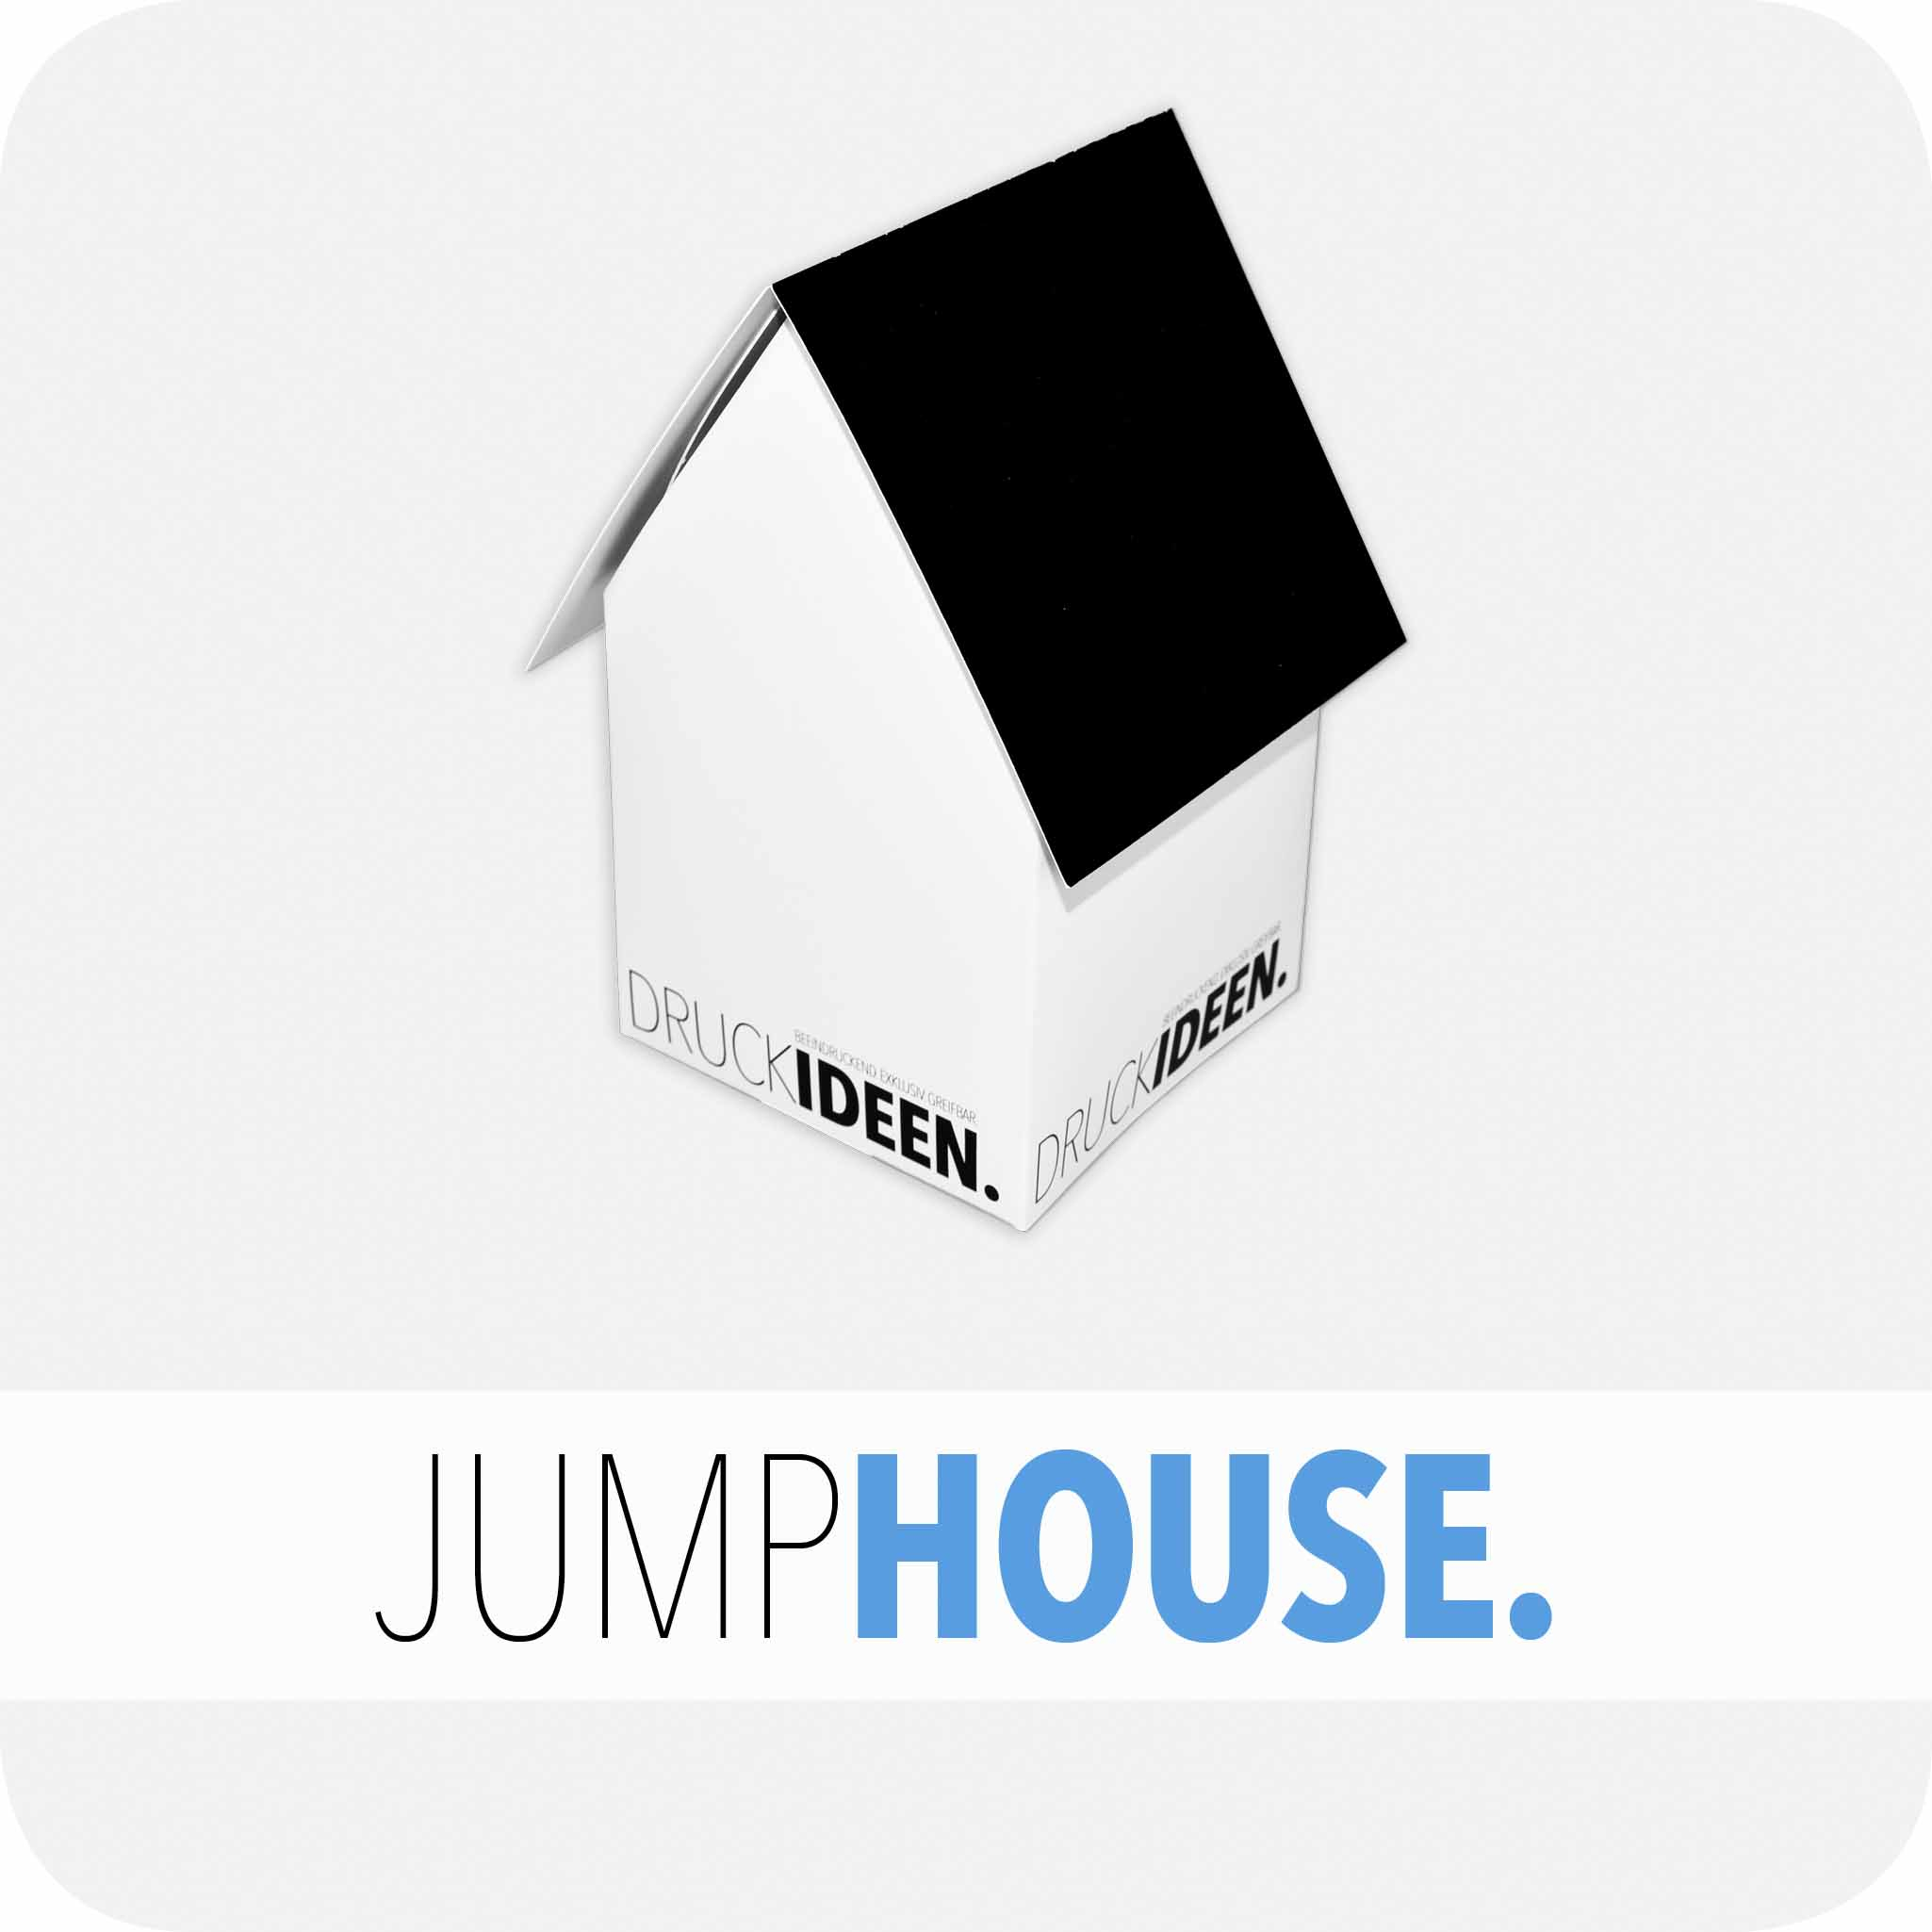 Jumphouse